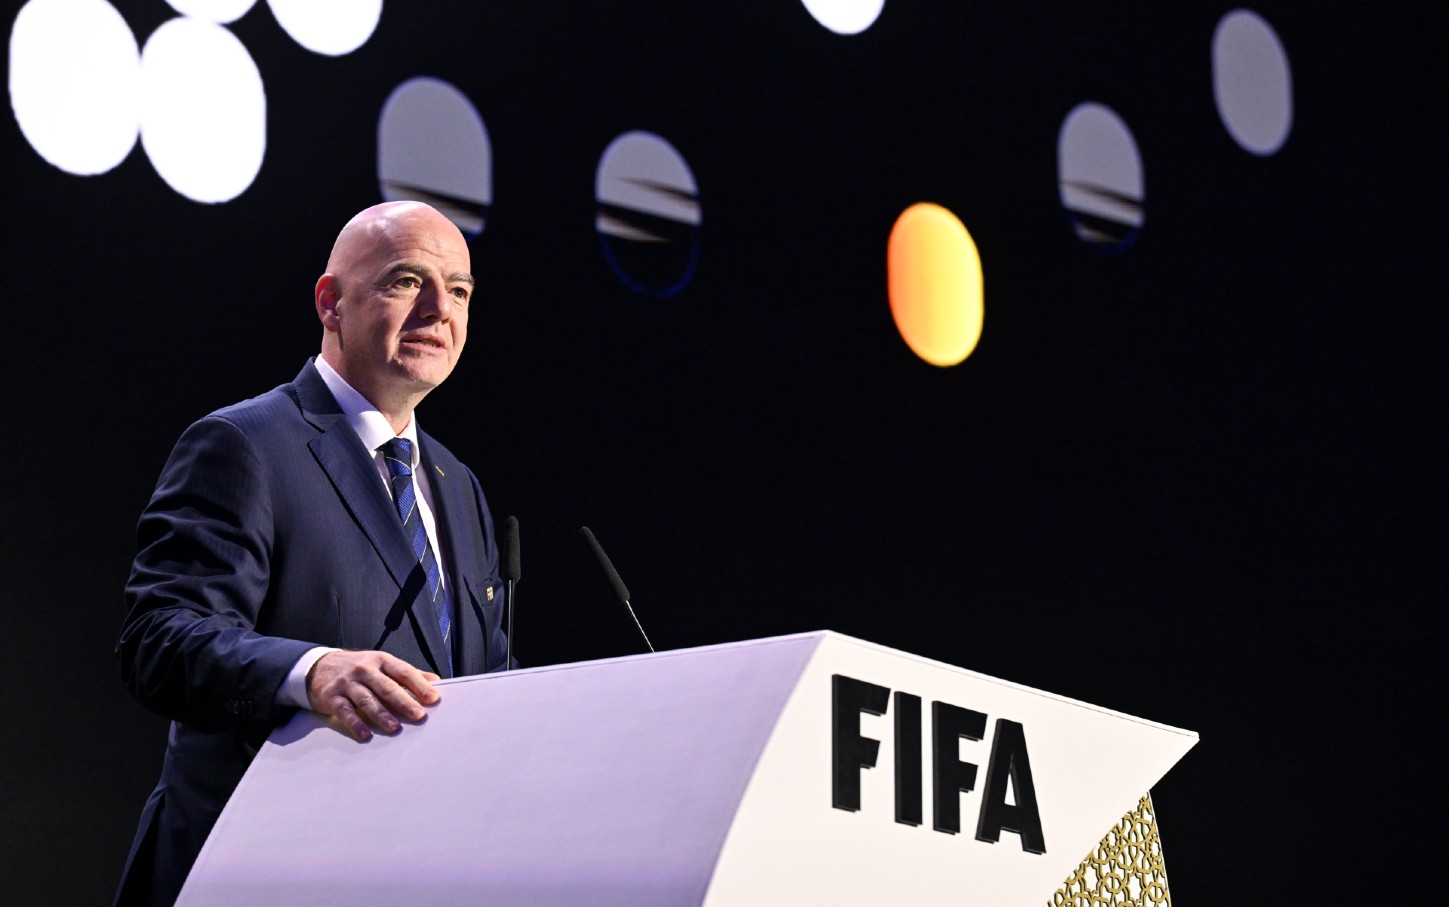 FIFA-Präsident Gianni Infantino auf dem Podium